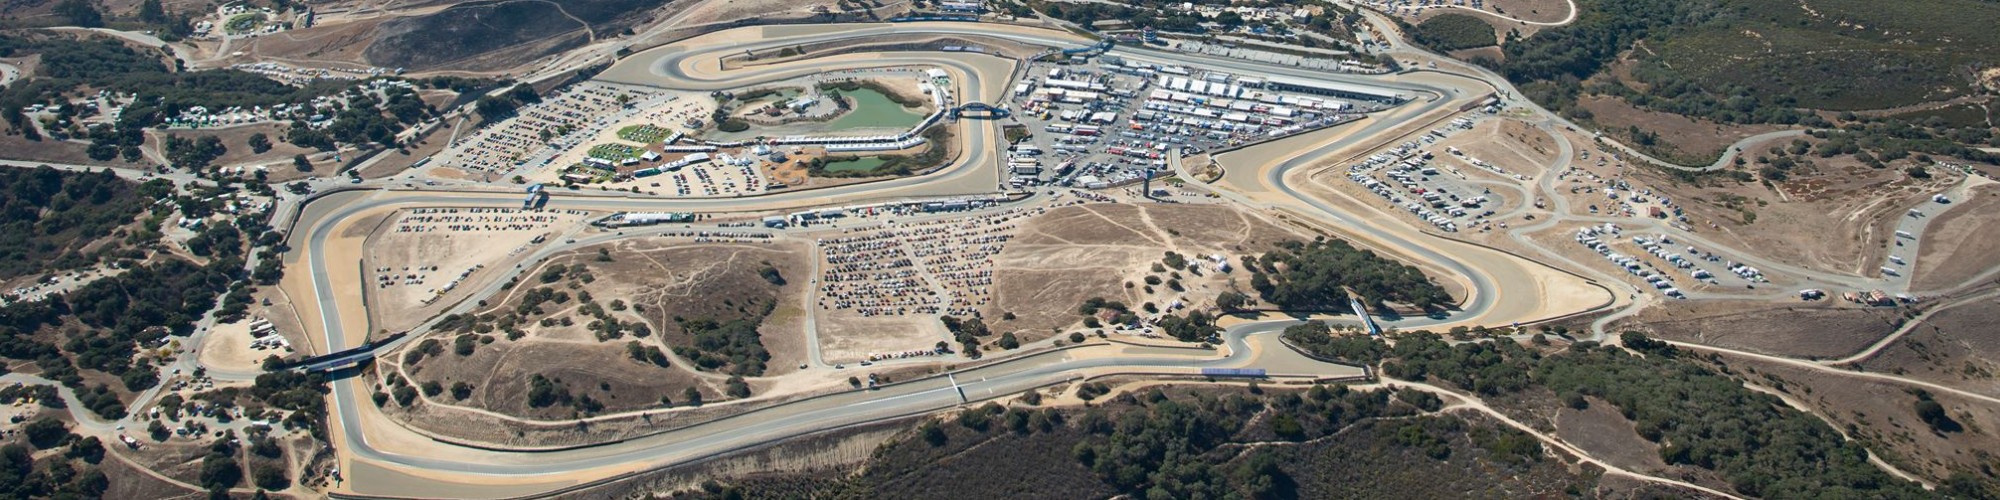 Mazda Raceway cover image